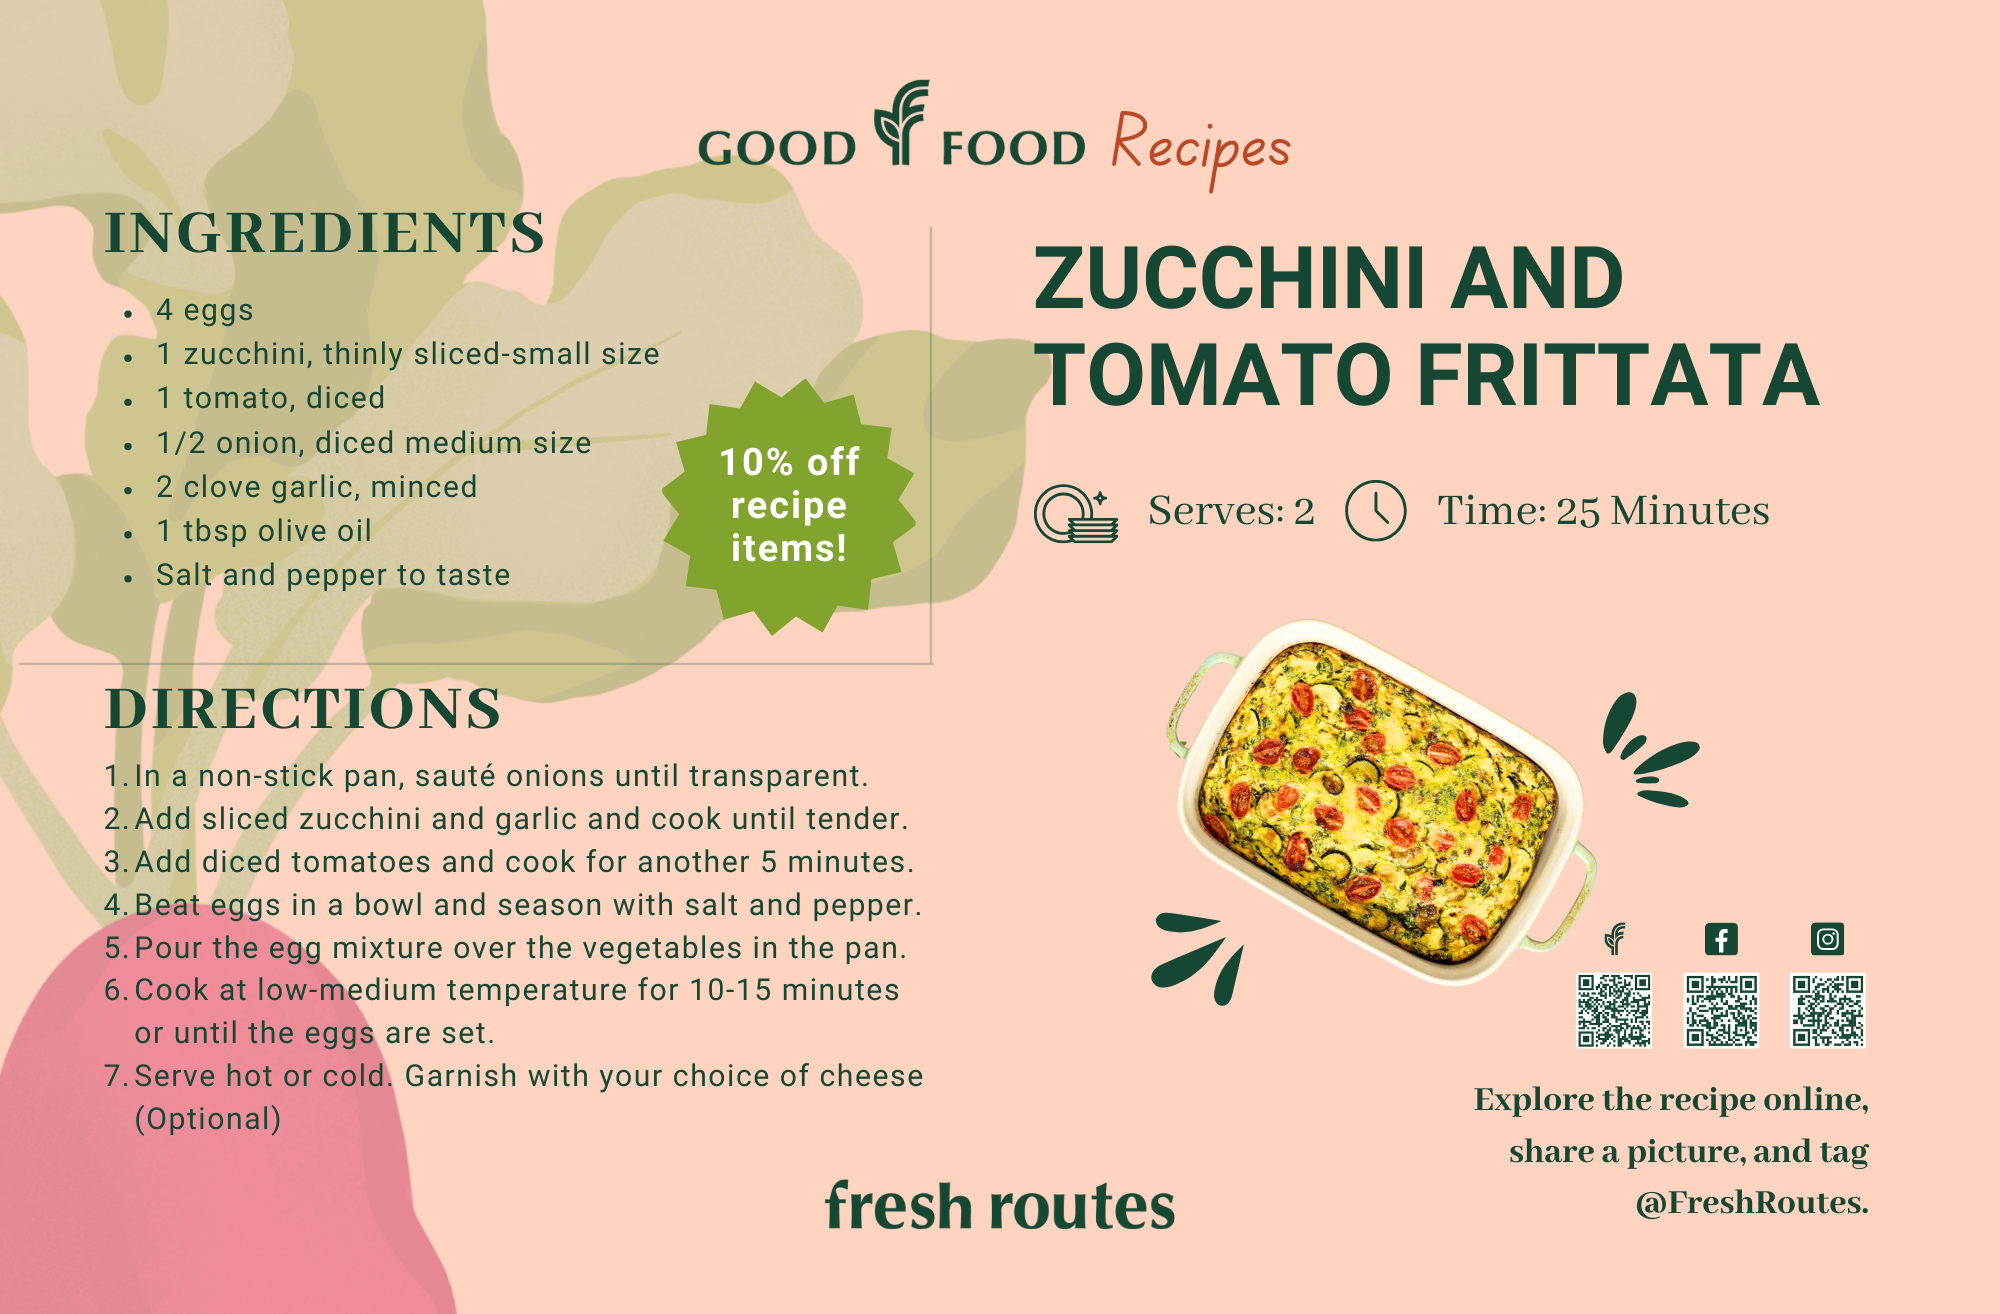 Zucchini and Tomato Frittata